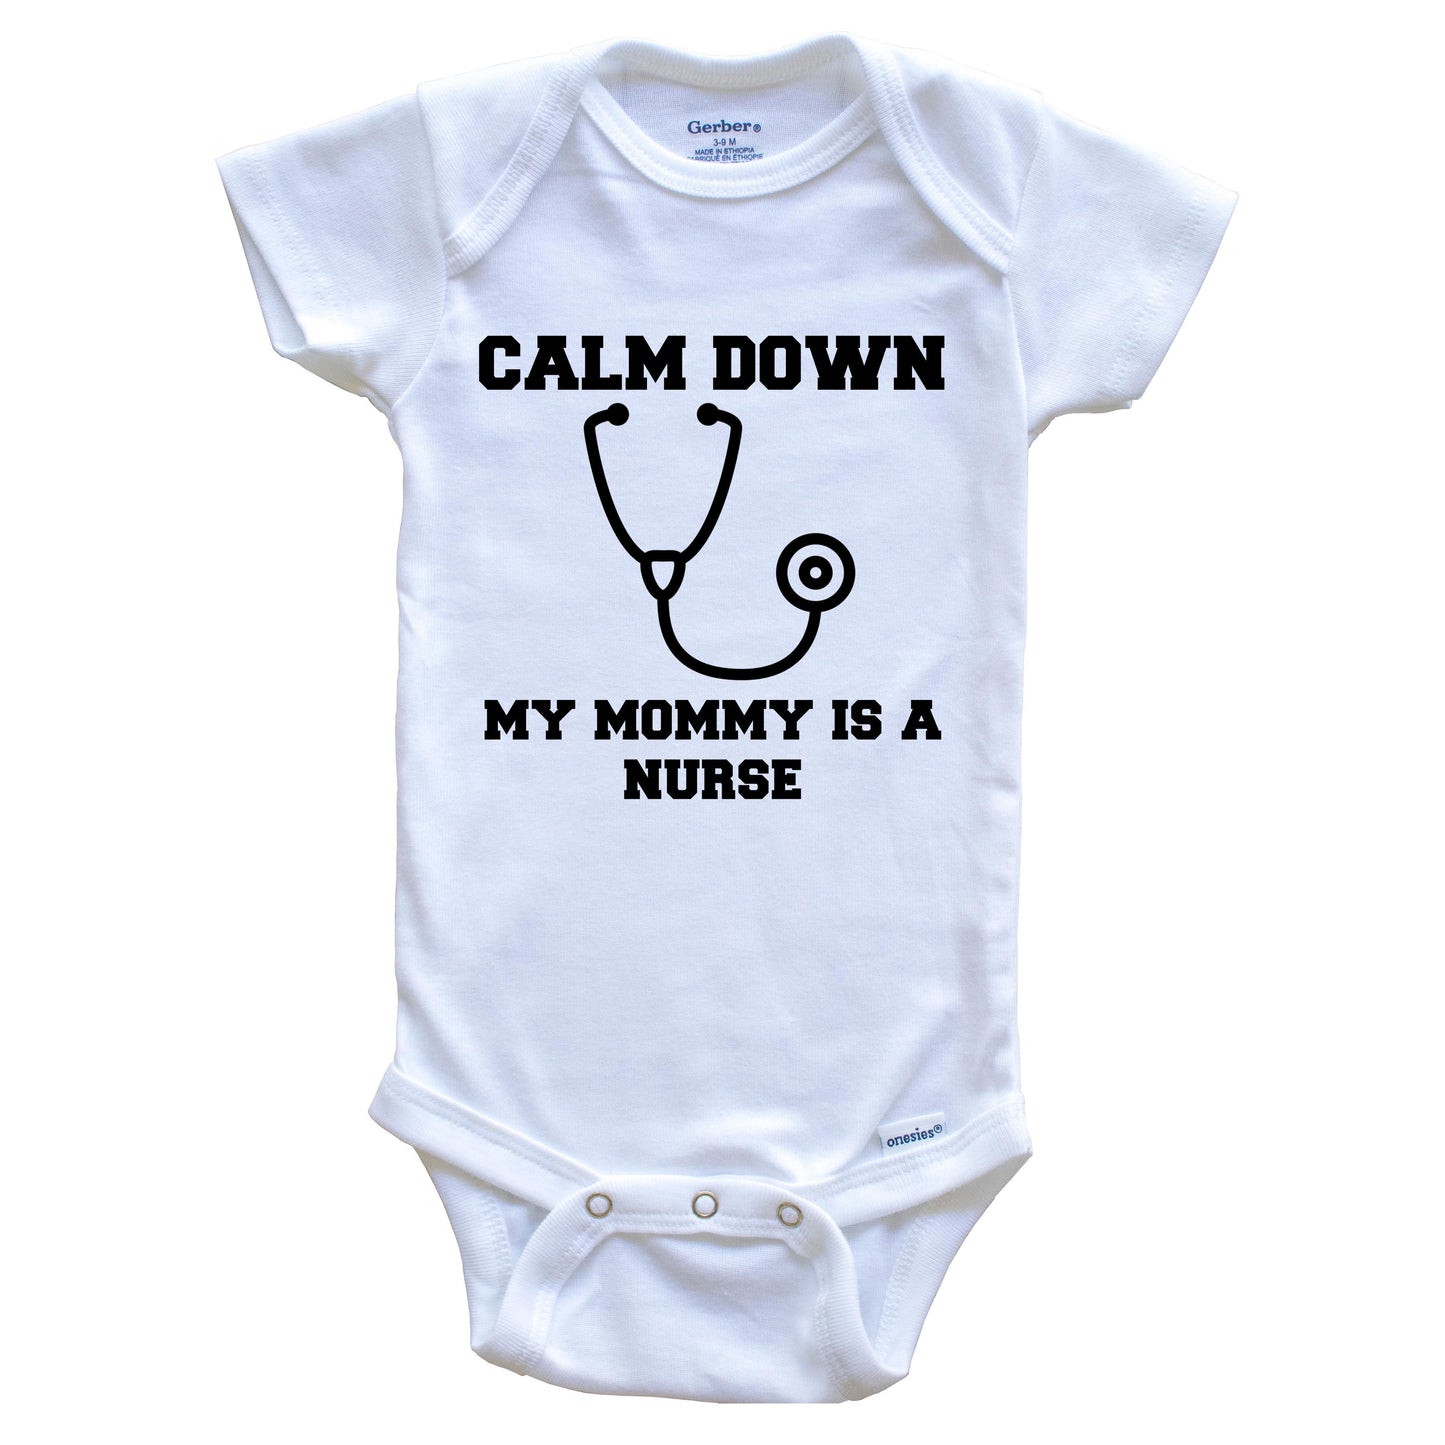 Calm Down My Mommy Is A Nurse Funny Baby Onesie - One Piece Baby Bodysuit